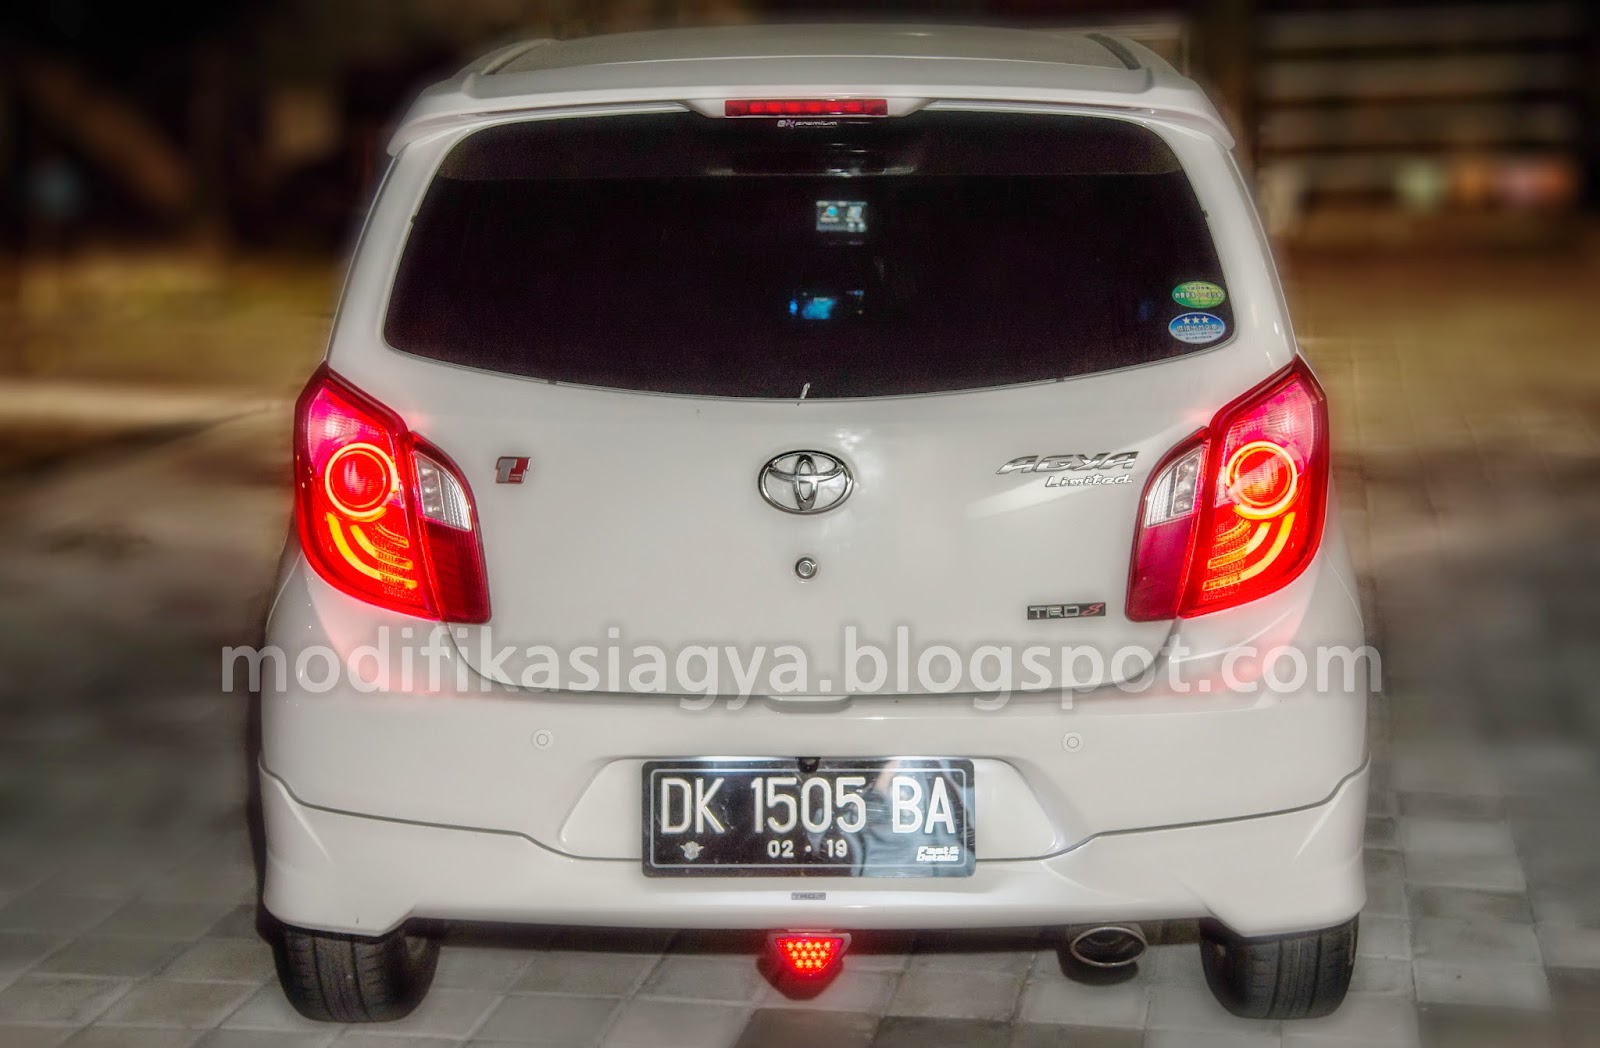 Modifikasi Toyota Agya Modifikasi Lampu Belakang Tail Light Toyota